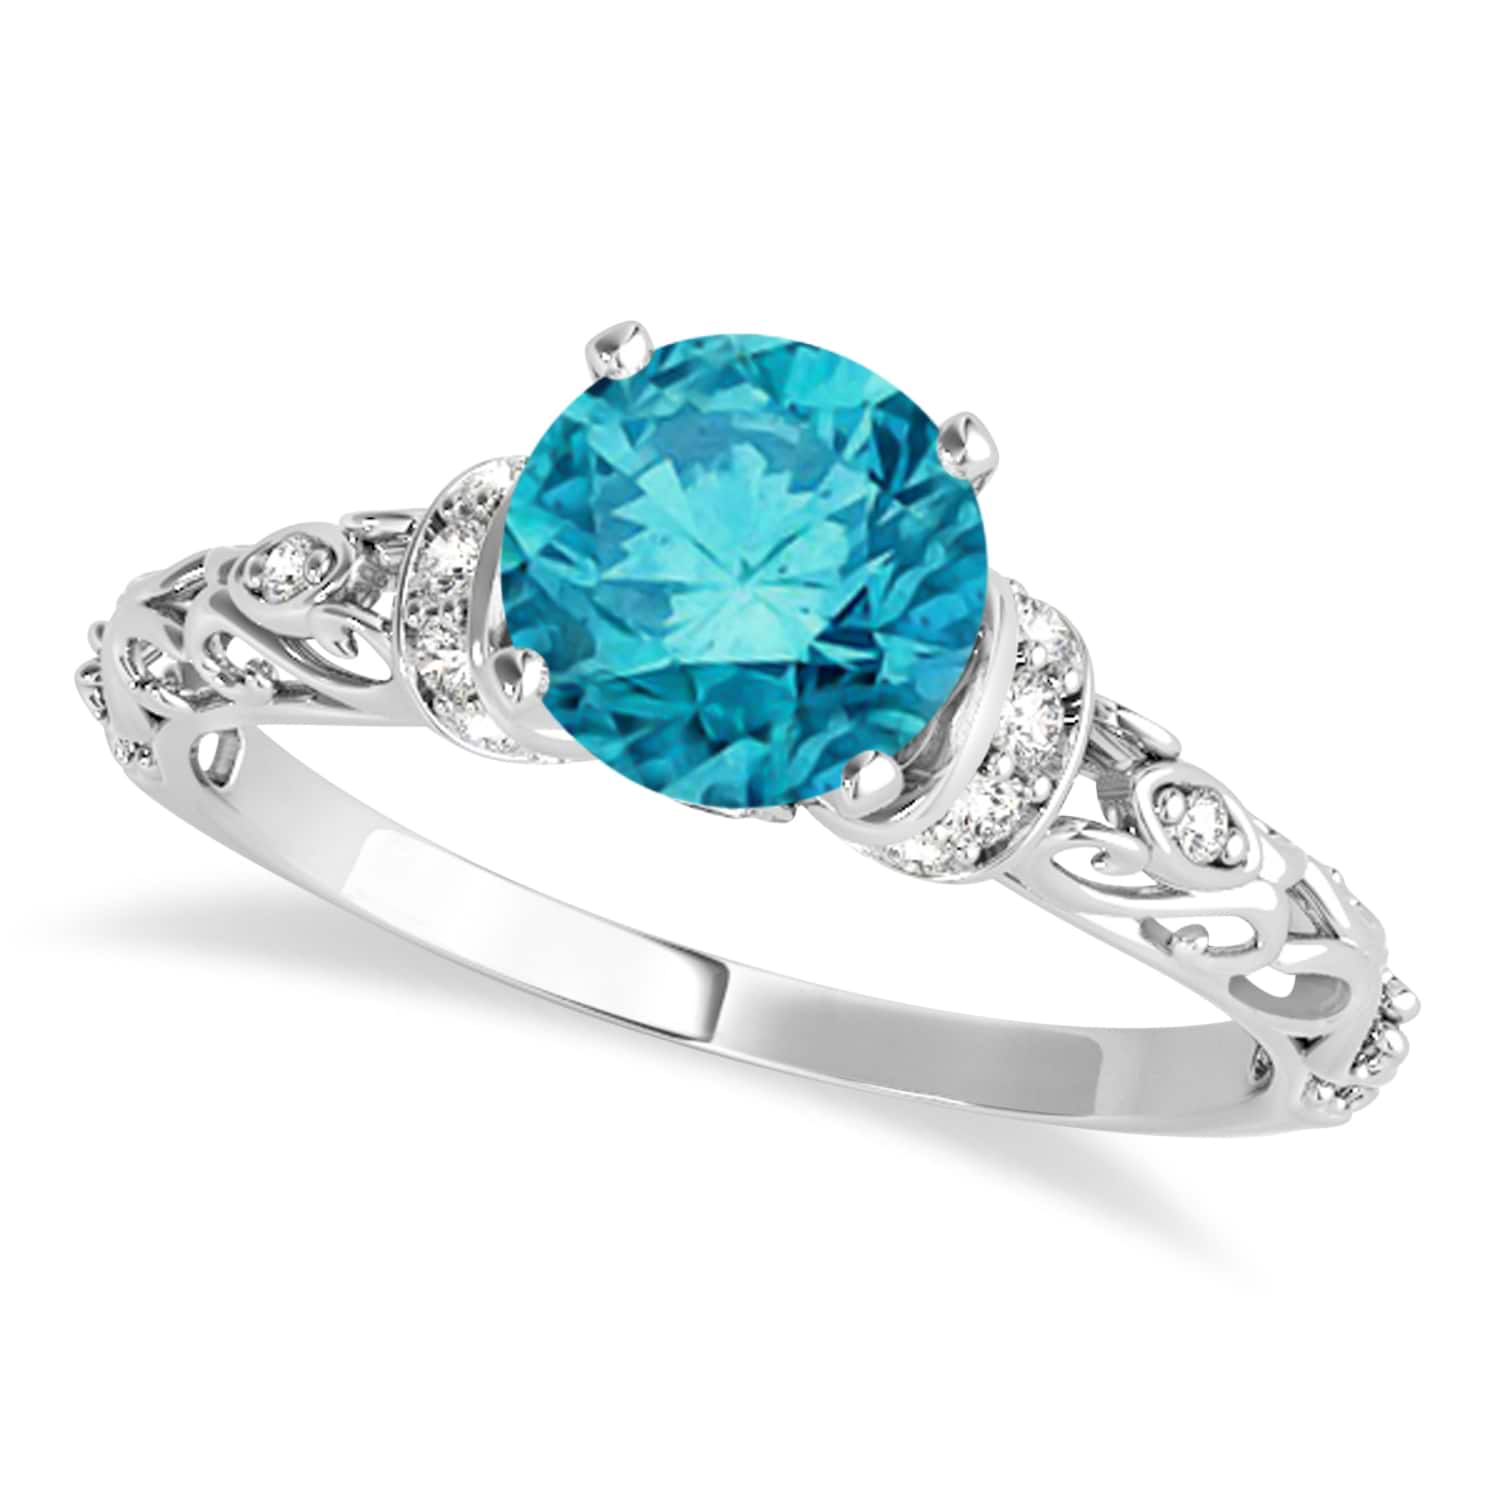 Blue Diamond & Diamond Antique Style Engagement Ring 14k White Gold (0.87ct)